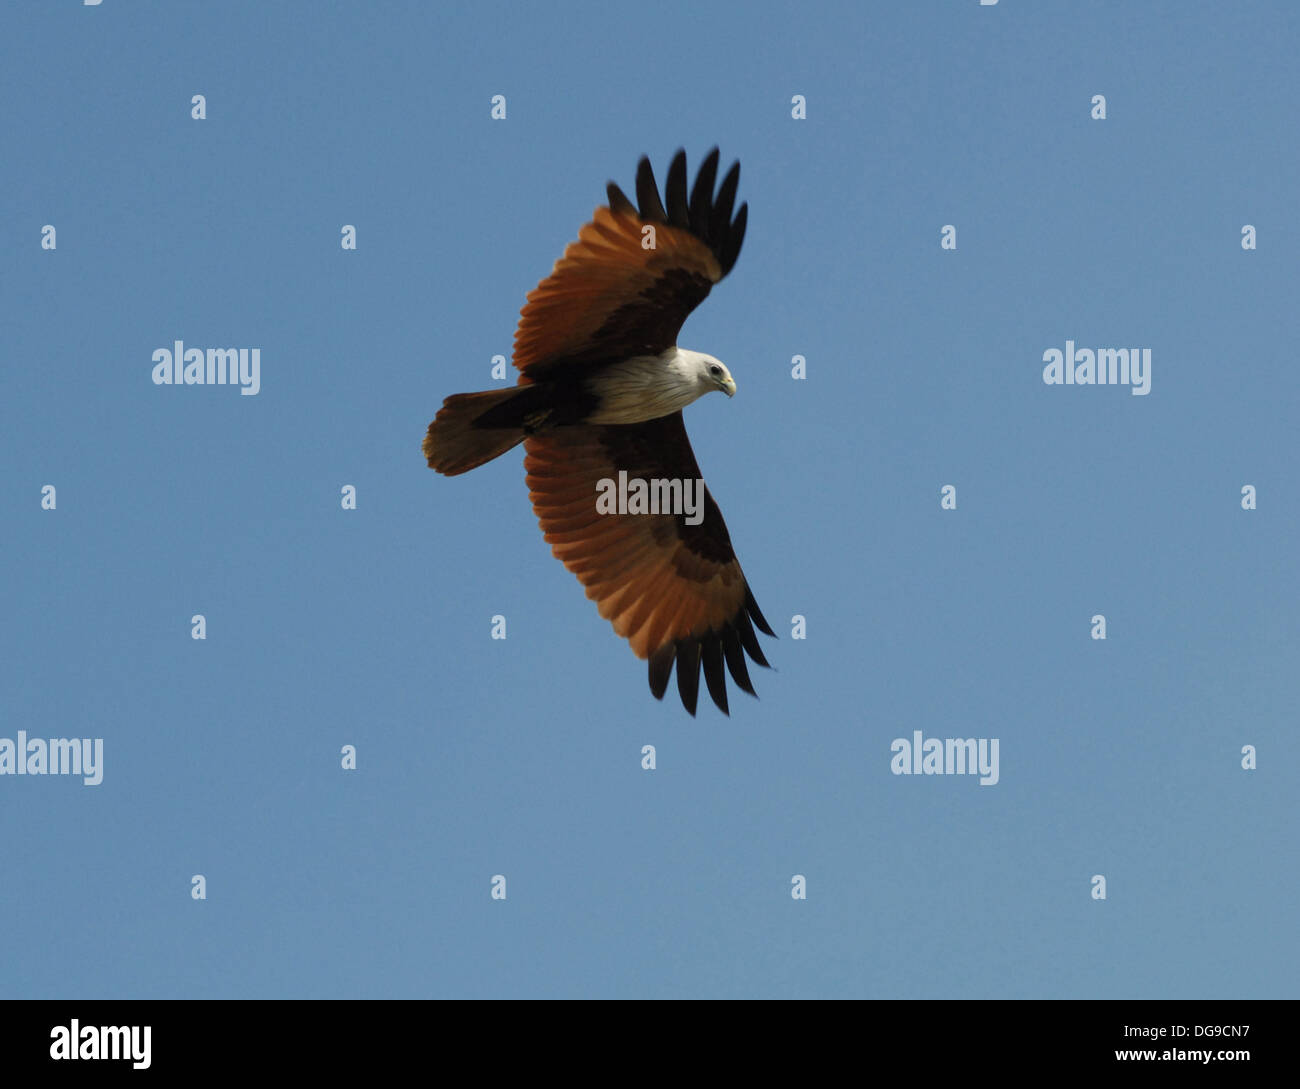 Flying Eagle dans ciel bleu clair Banque D'Images